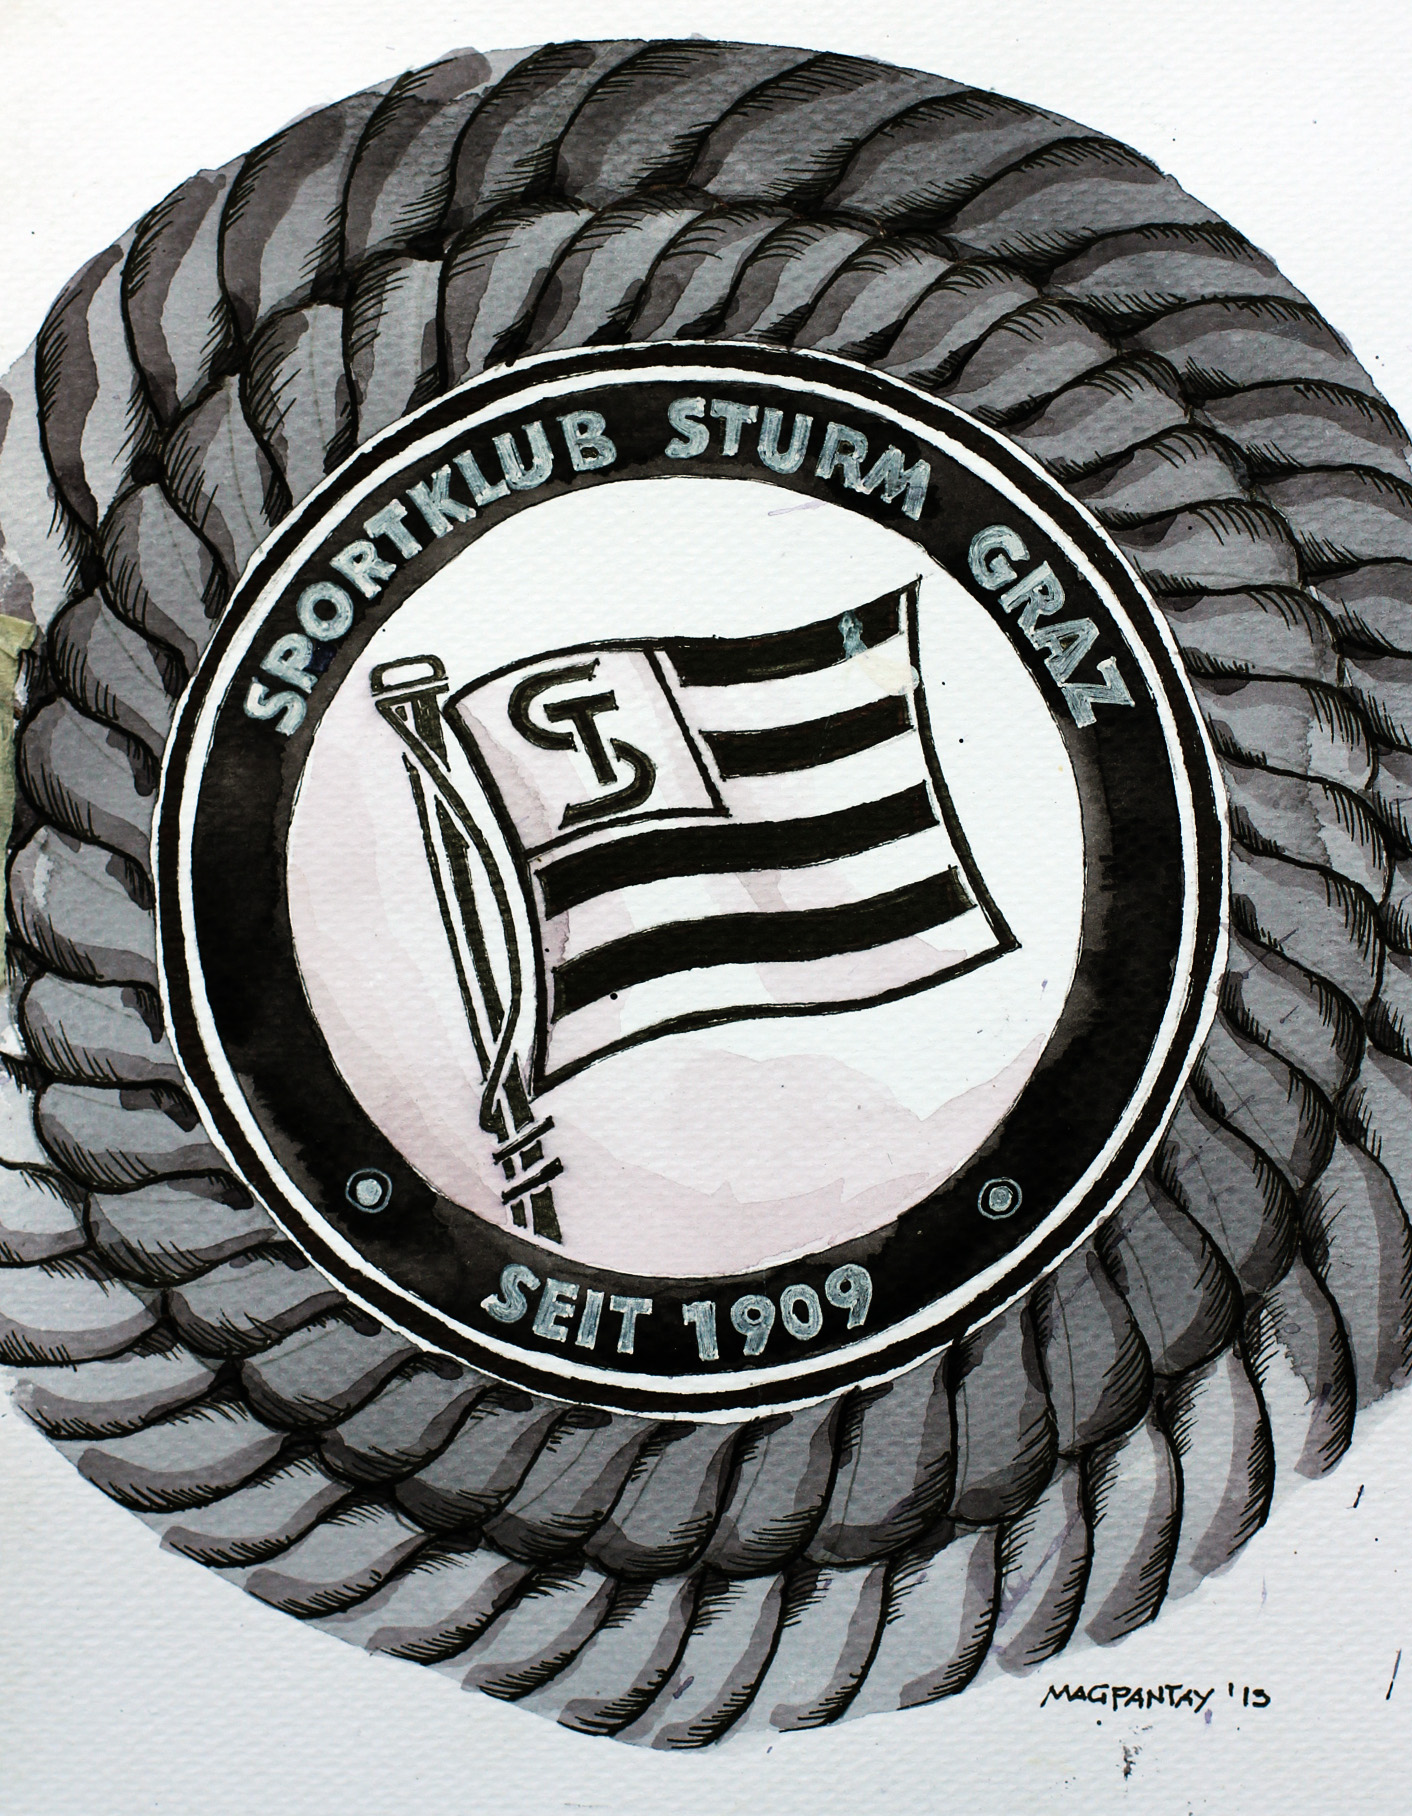 Sk Sturm Graz